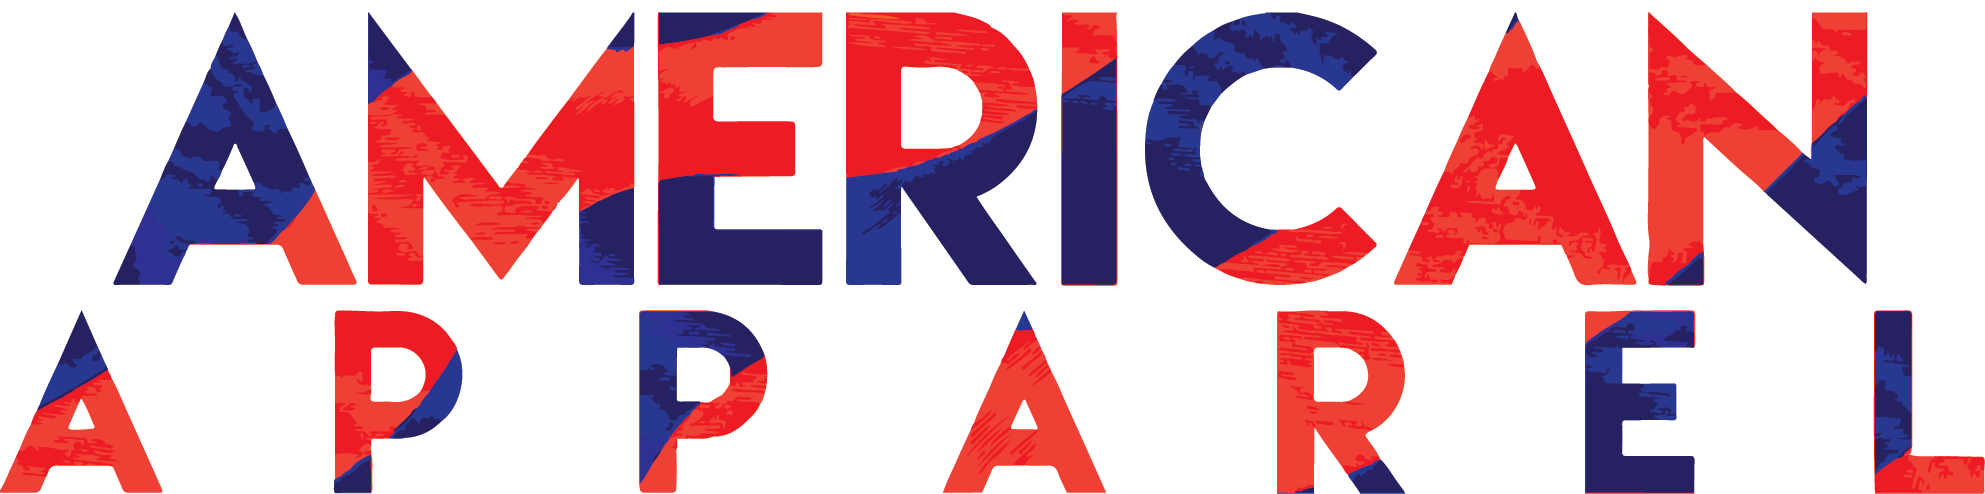 American Apparel Logo - Suner Mauerhan - American Apparel Re-Brand